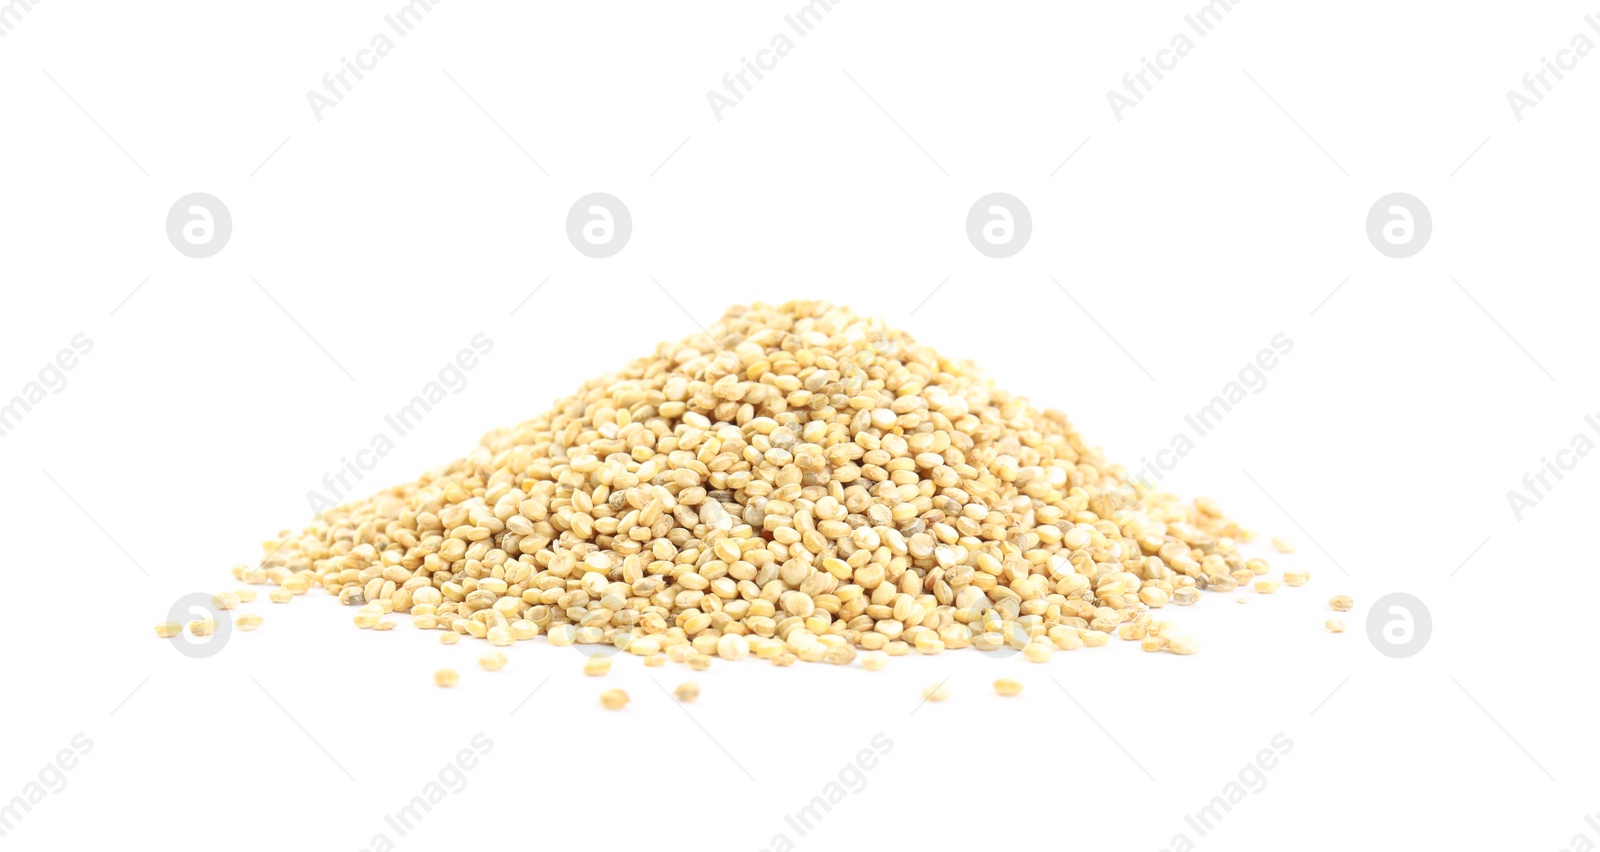 Photo of Pile of raw quinoa on white background